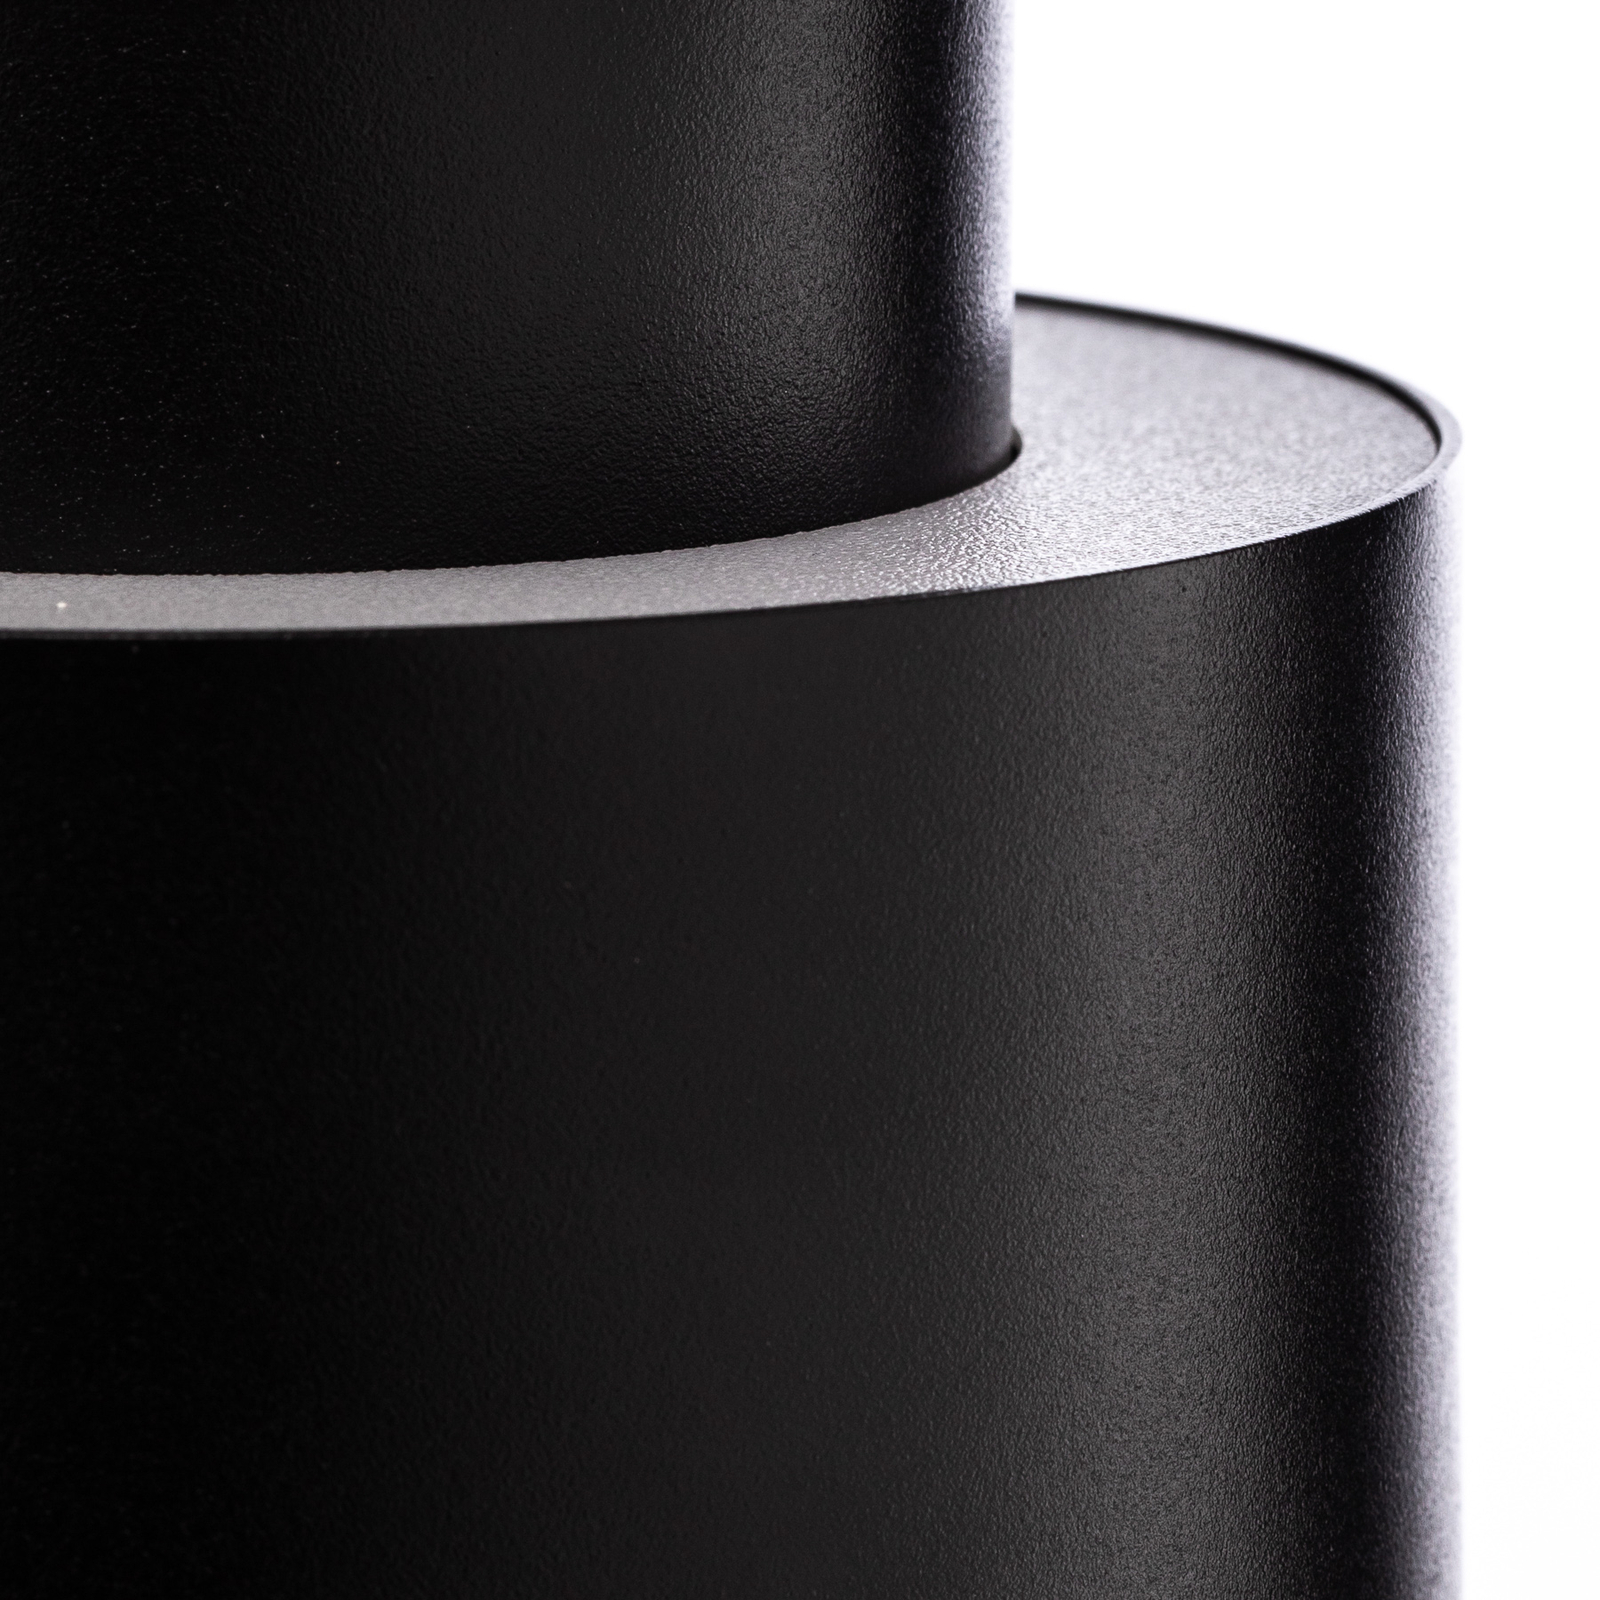 Lindby LED spotlight Nivoria, 11 x 8.8 cm, sand black, 4 units